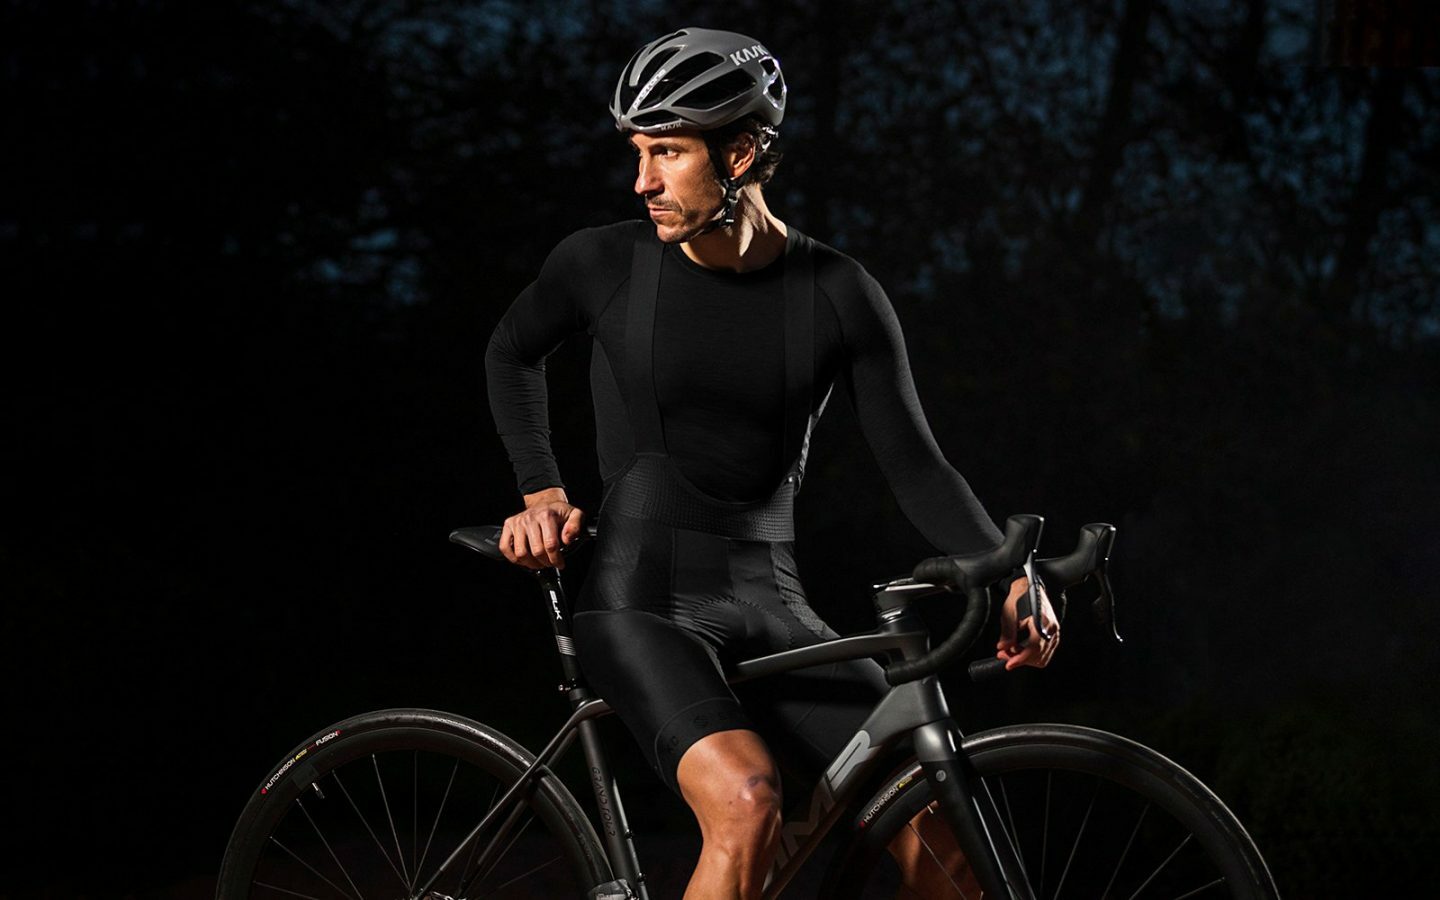 Men's Mesh Base Layer - Black Long Sleeve Cycling Undershirt